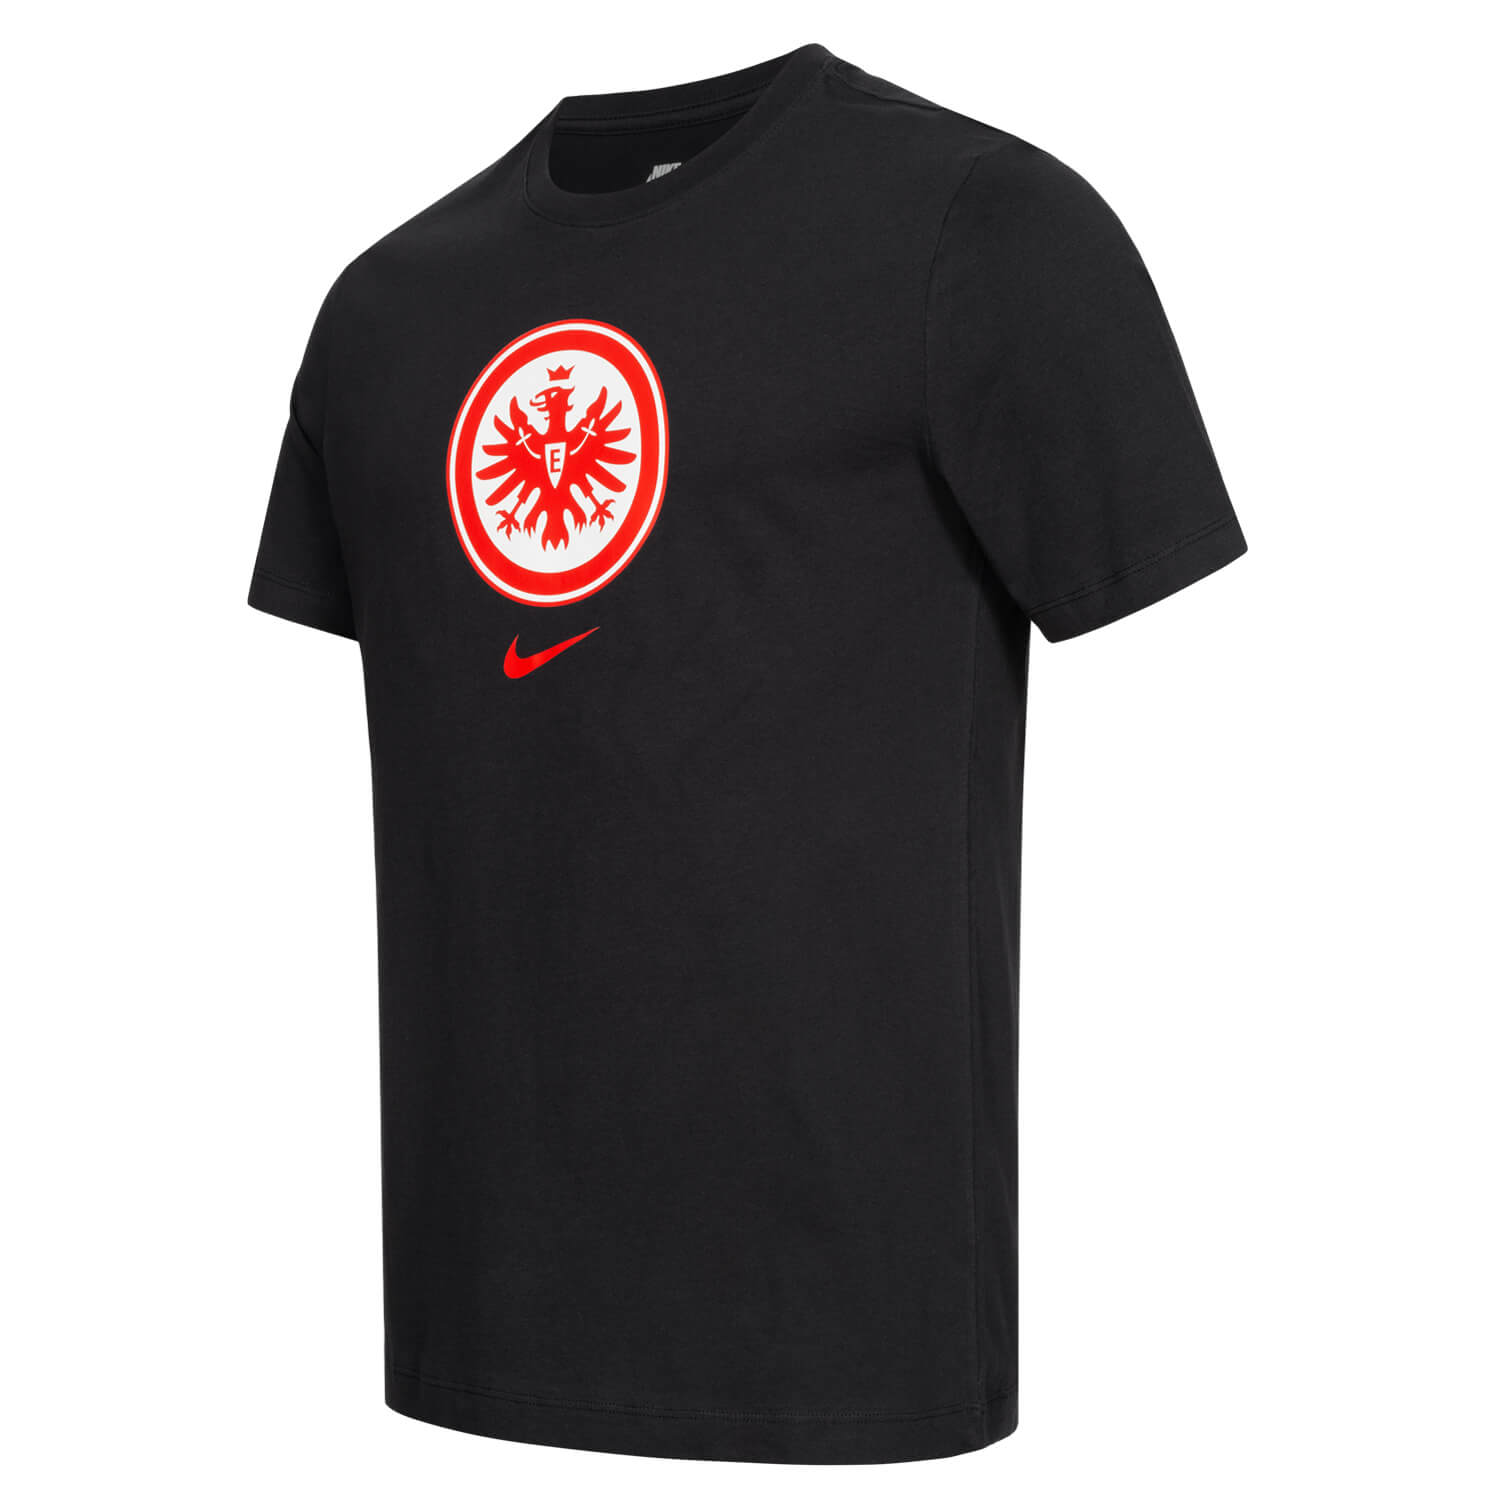 Bild 3: Nike T-Shirt 23 schwarz